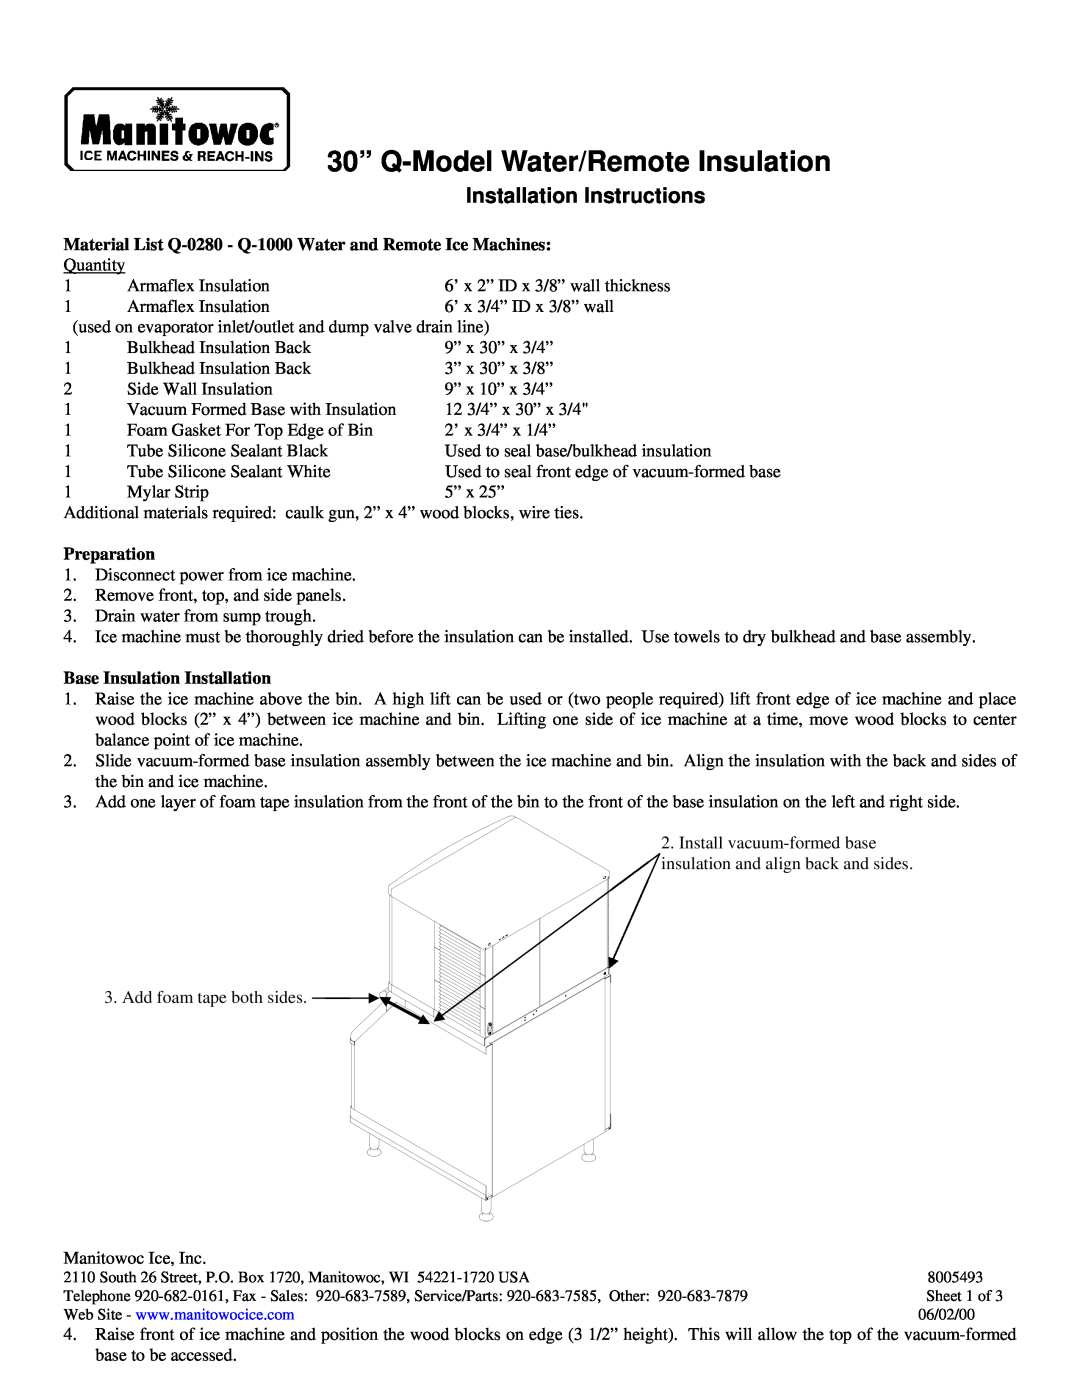 Manitowoc Ice Q-0280 installation instructions Preparation, Base Insulation Installation, Installation Instructions 